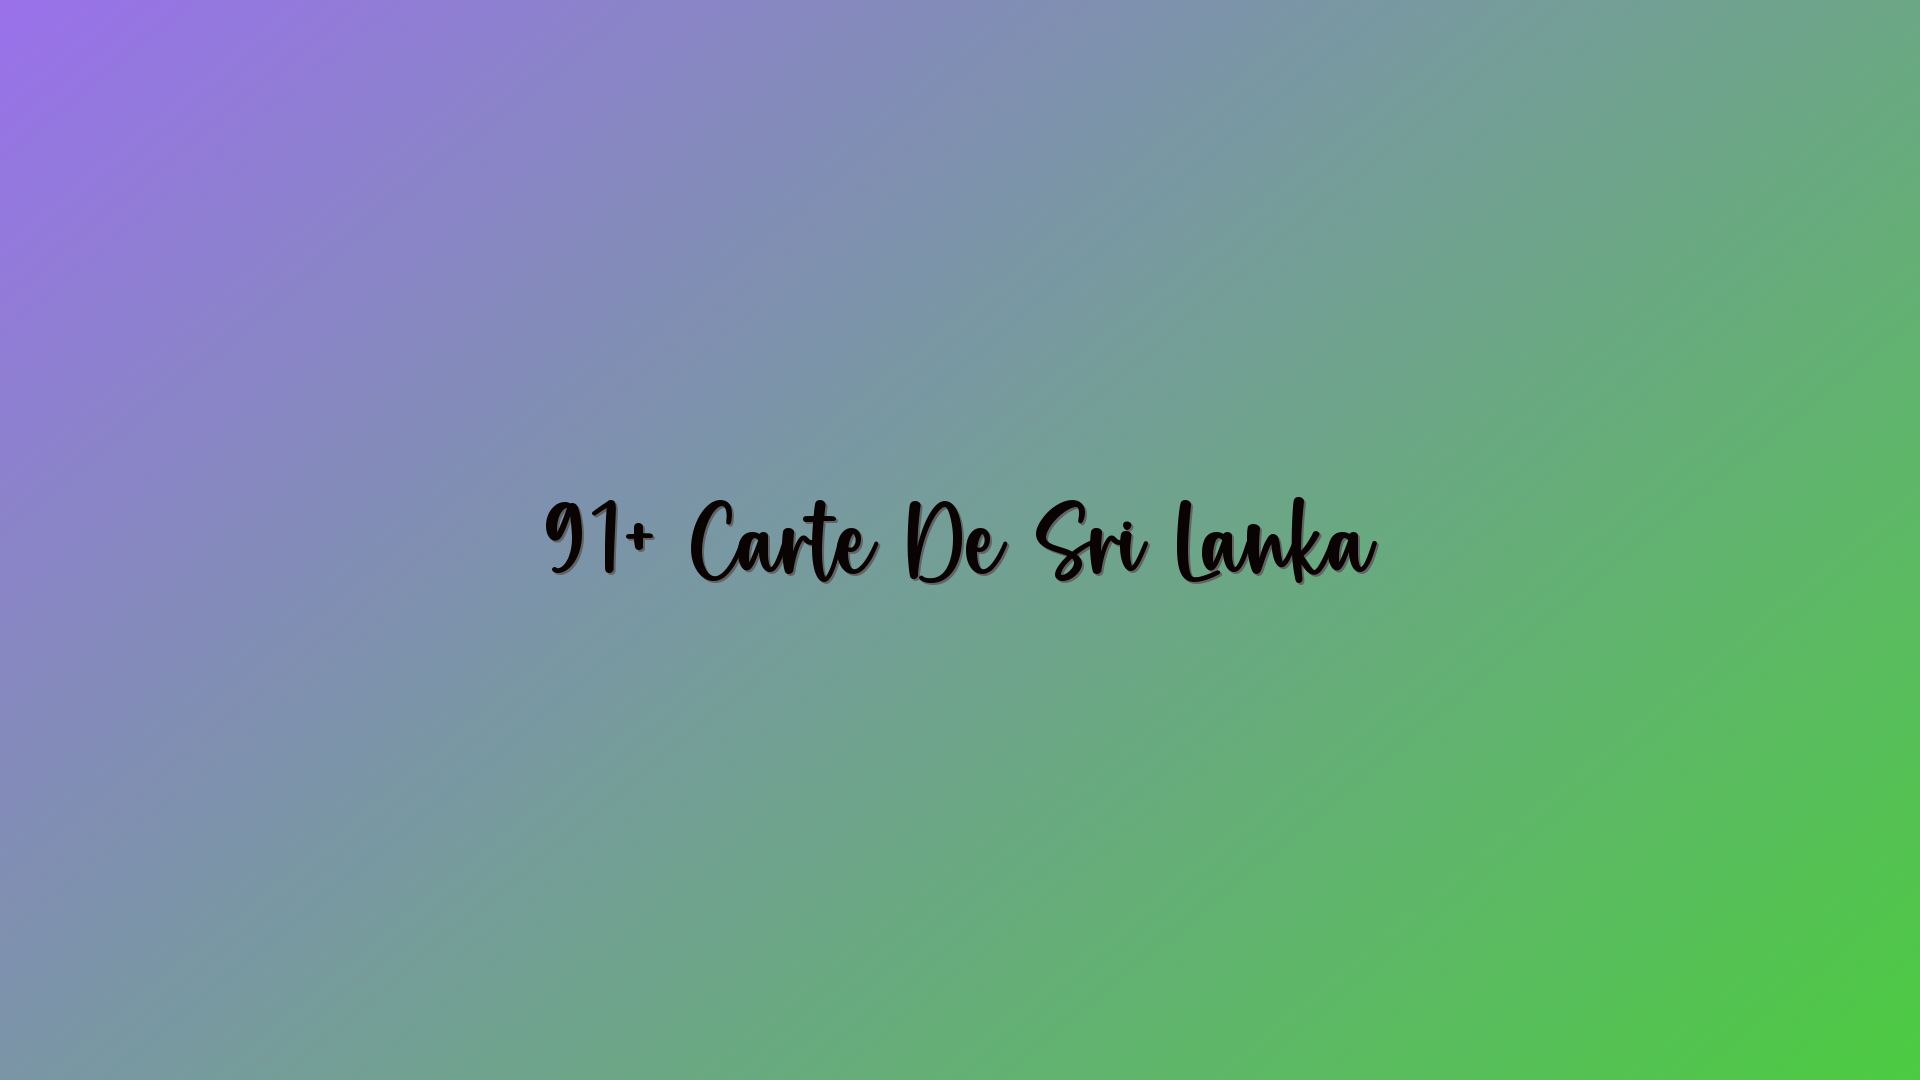 91+ Carte De Sri Lanka